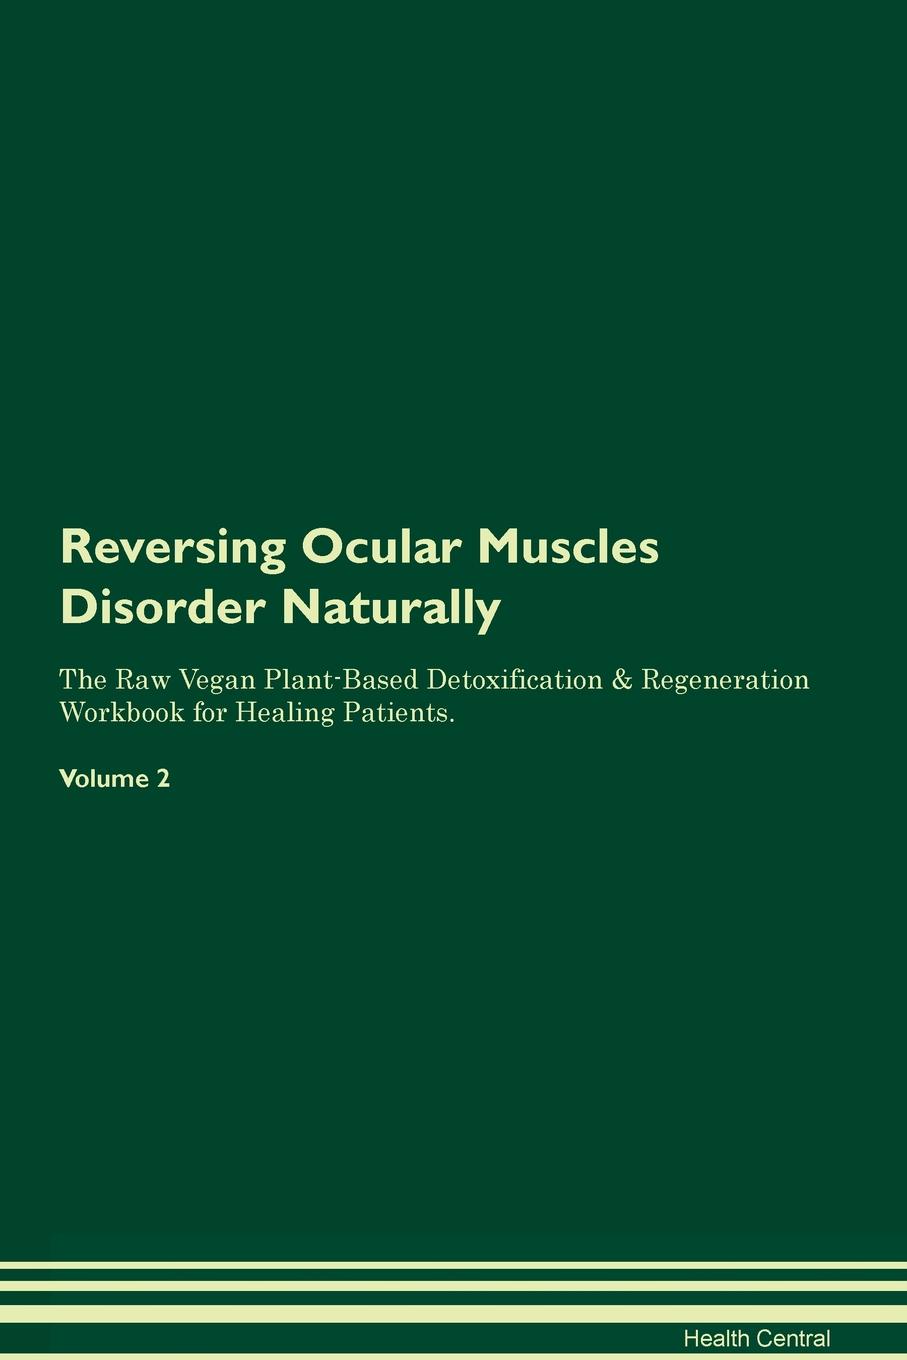 Reversing Ocular Muscles Disorder Naturally The Raw Vegan Plant-Based Detoxification & Regeneration Workbook for Healing Patients. Volume 2